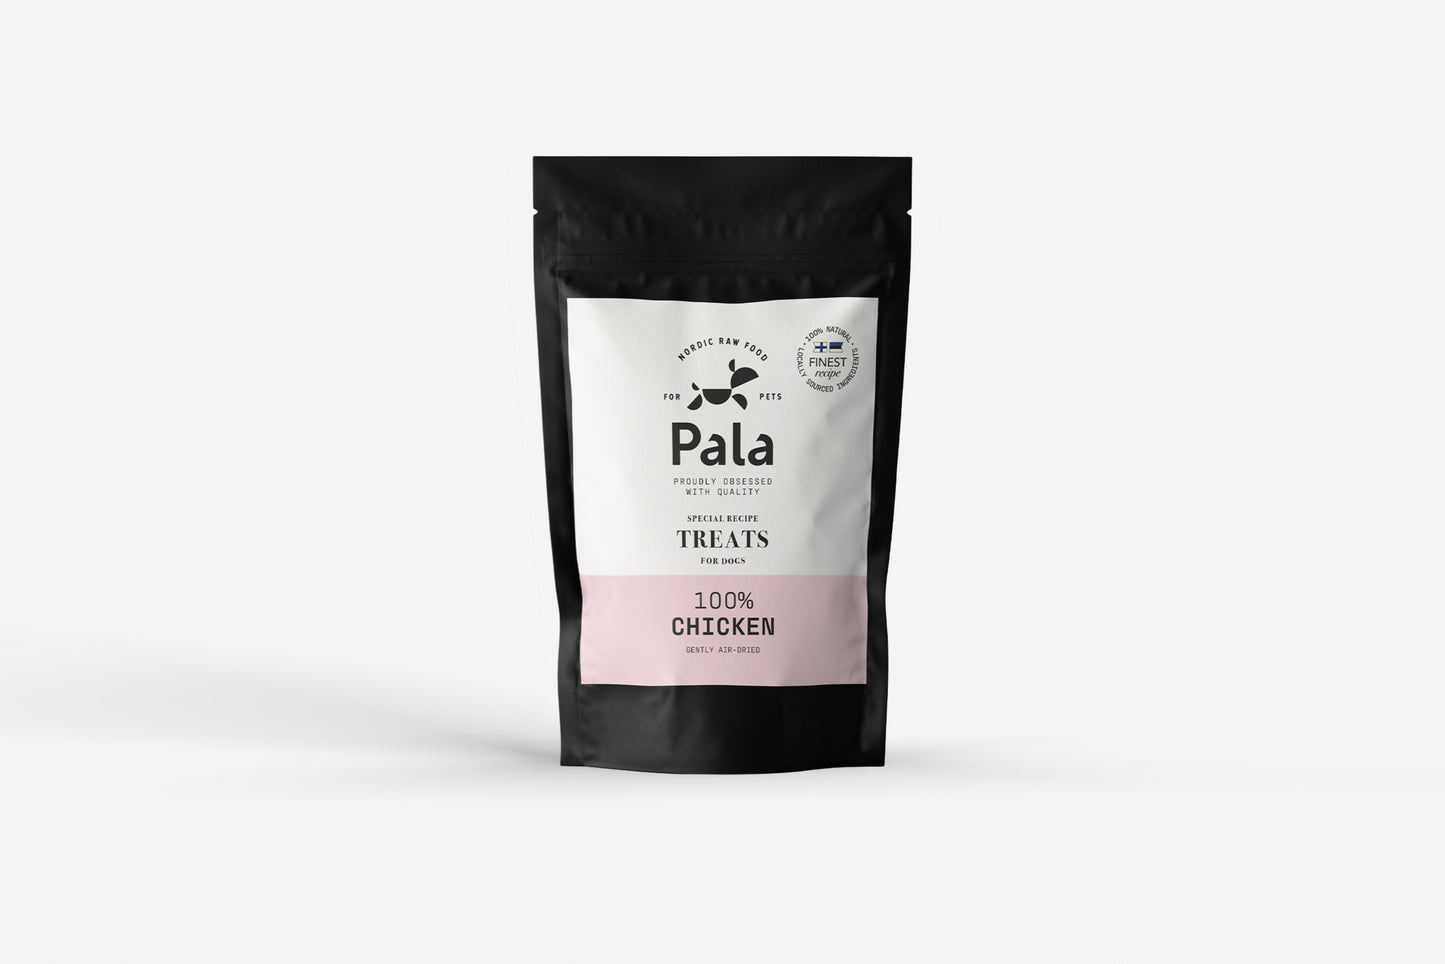 Pala Treats - 100% kylling